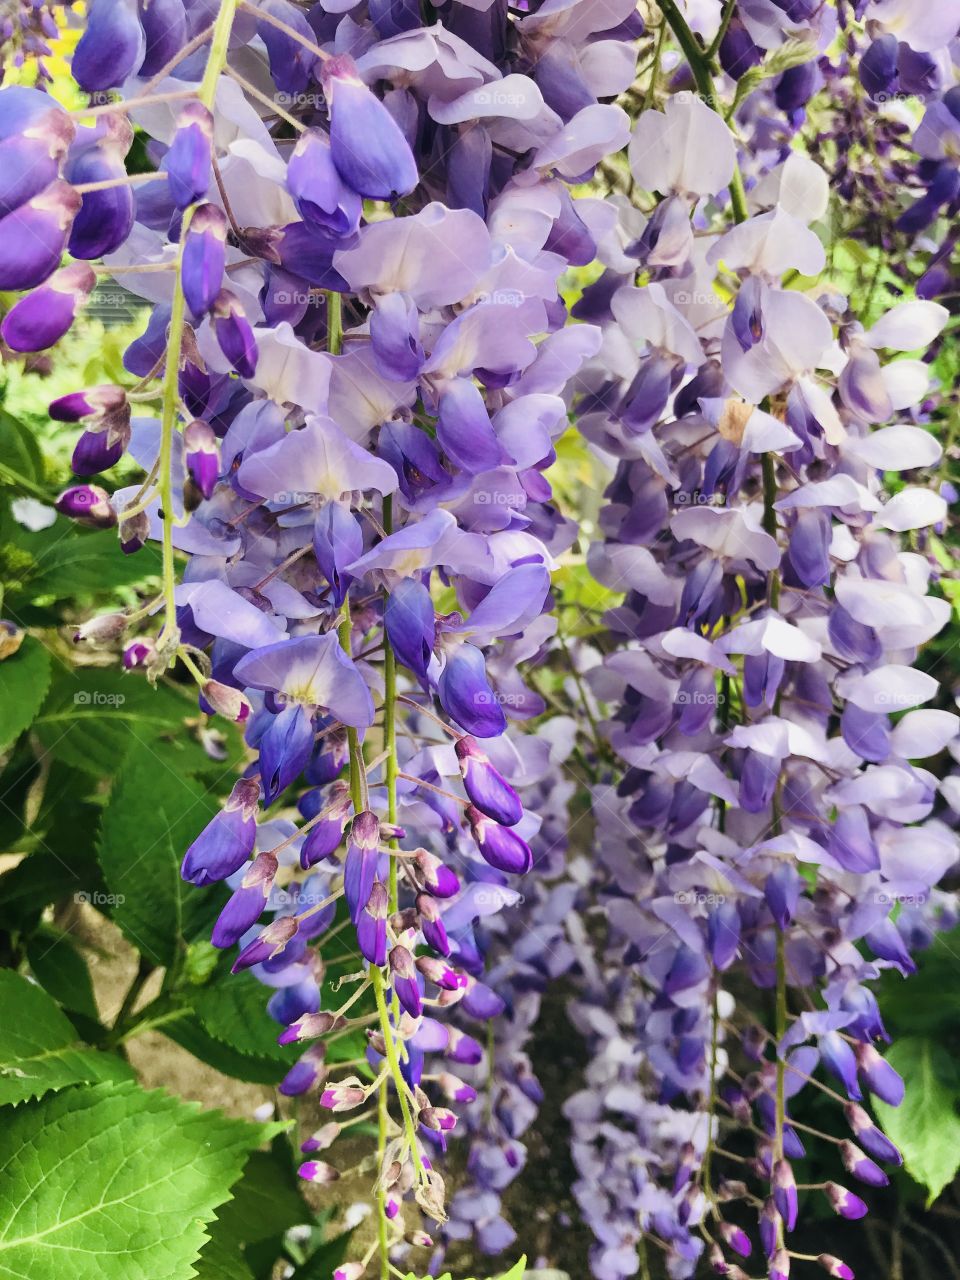 Wild purple wisteria’s calling you